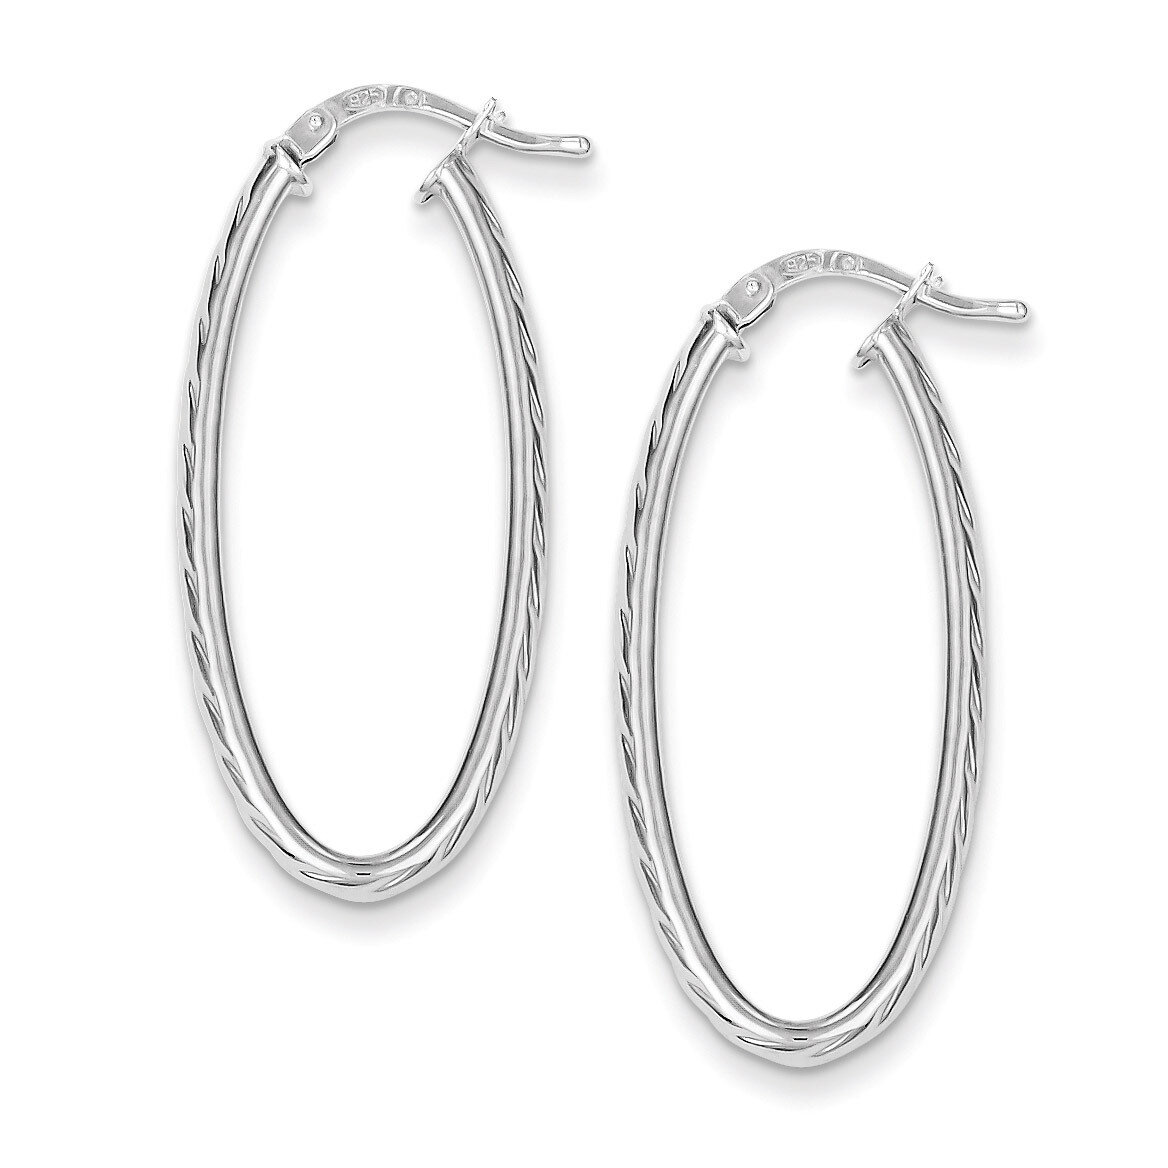 Hollow Oval Hoop Earrings Textured Sterling Silver QE8259